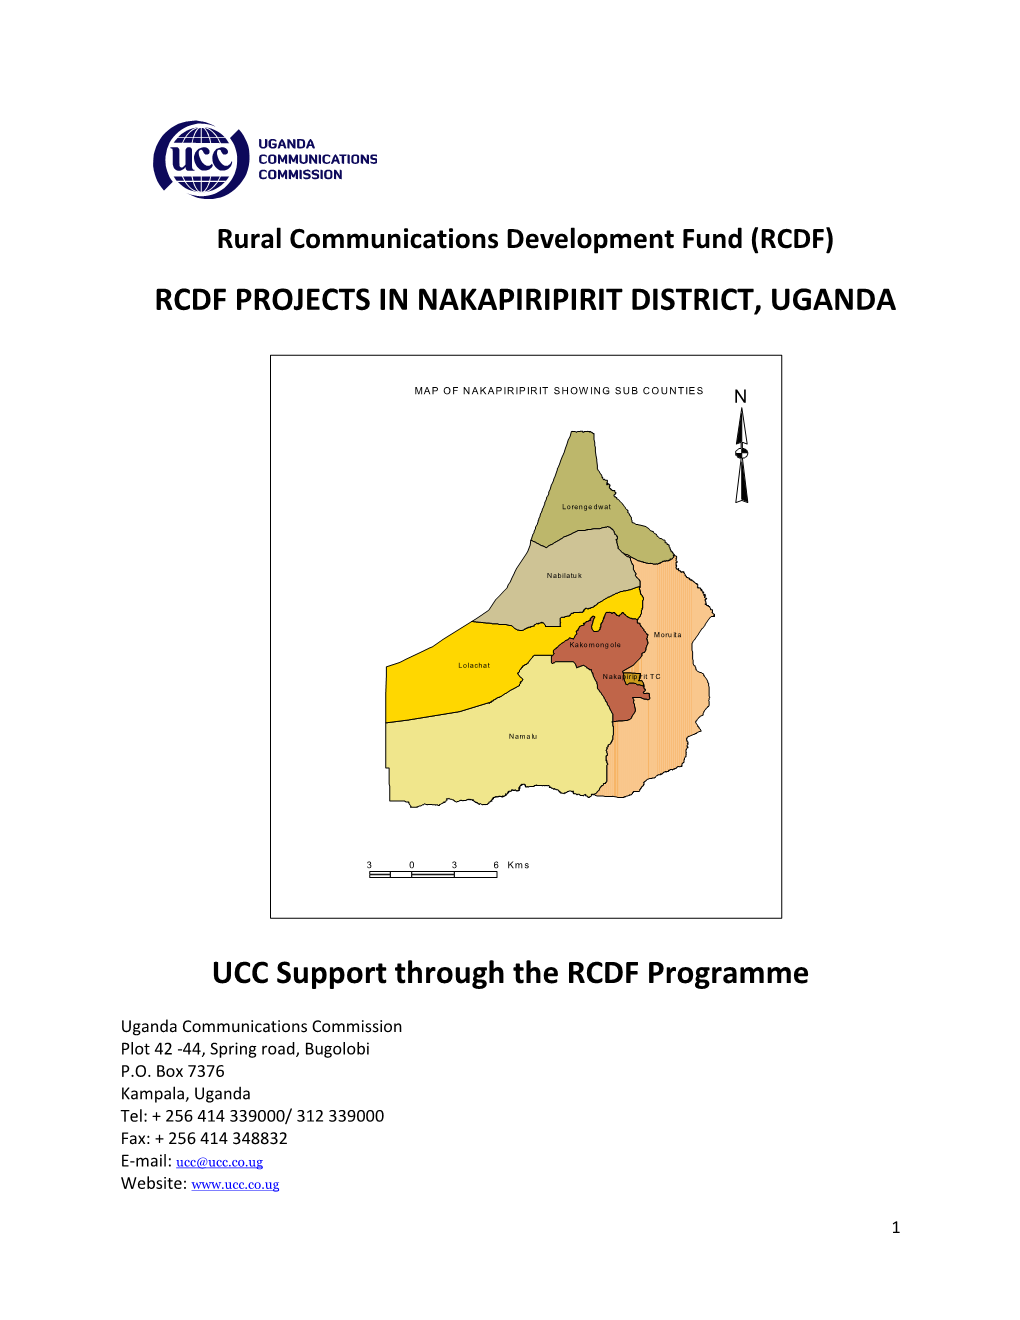 RCDF PROJECTS in NAKAPIRIPIRIT DISTRICT, UGANDA UCC Support